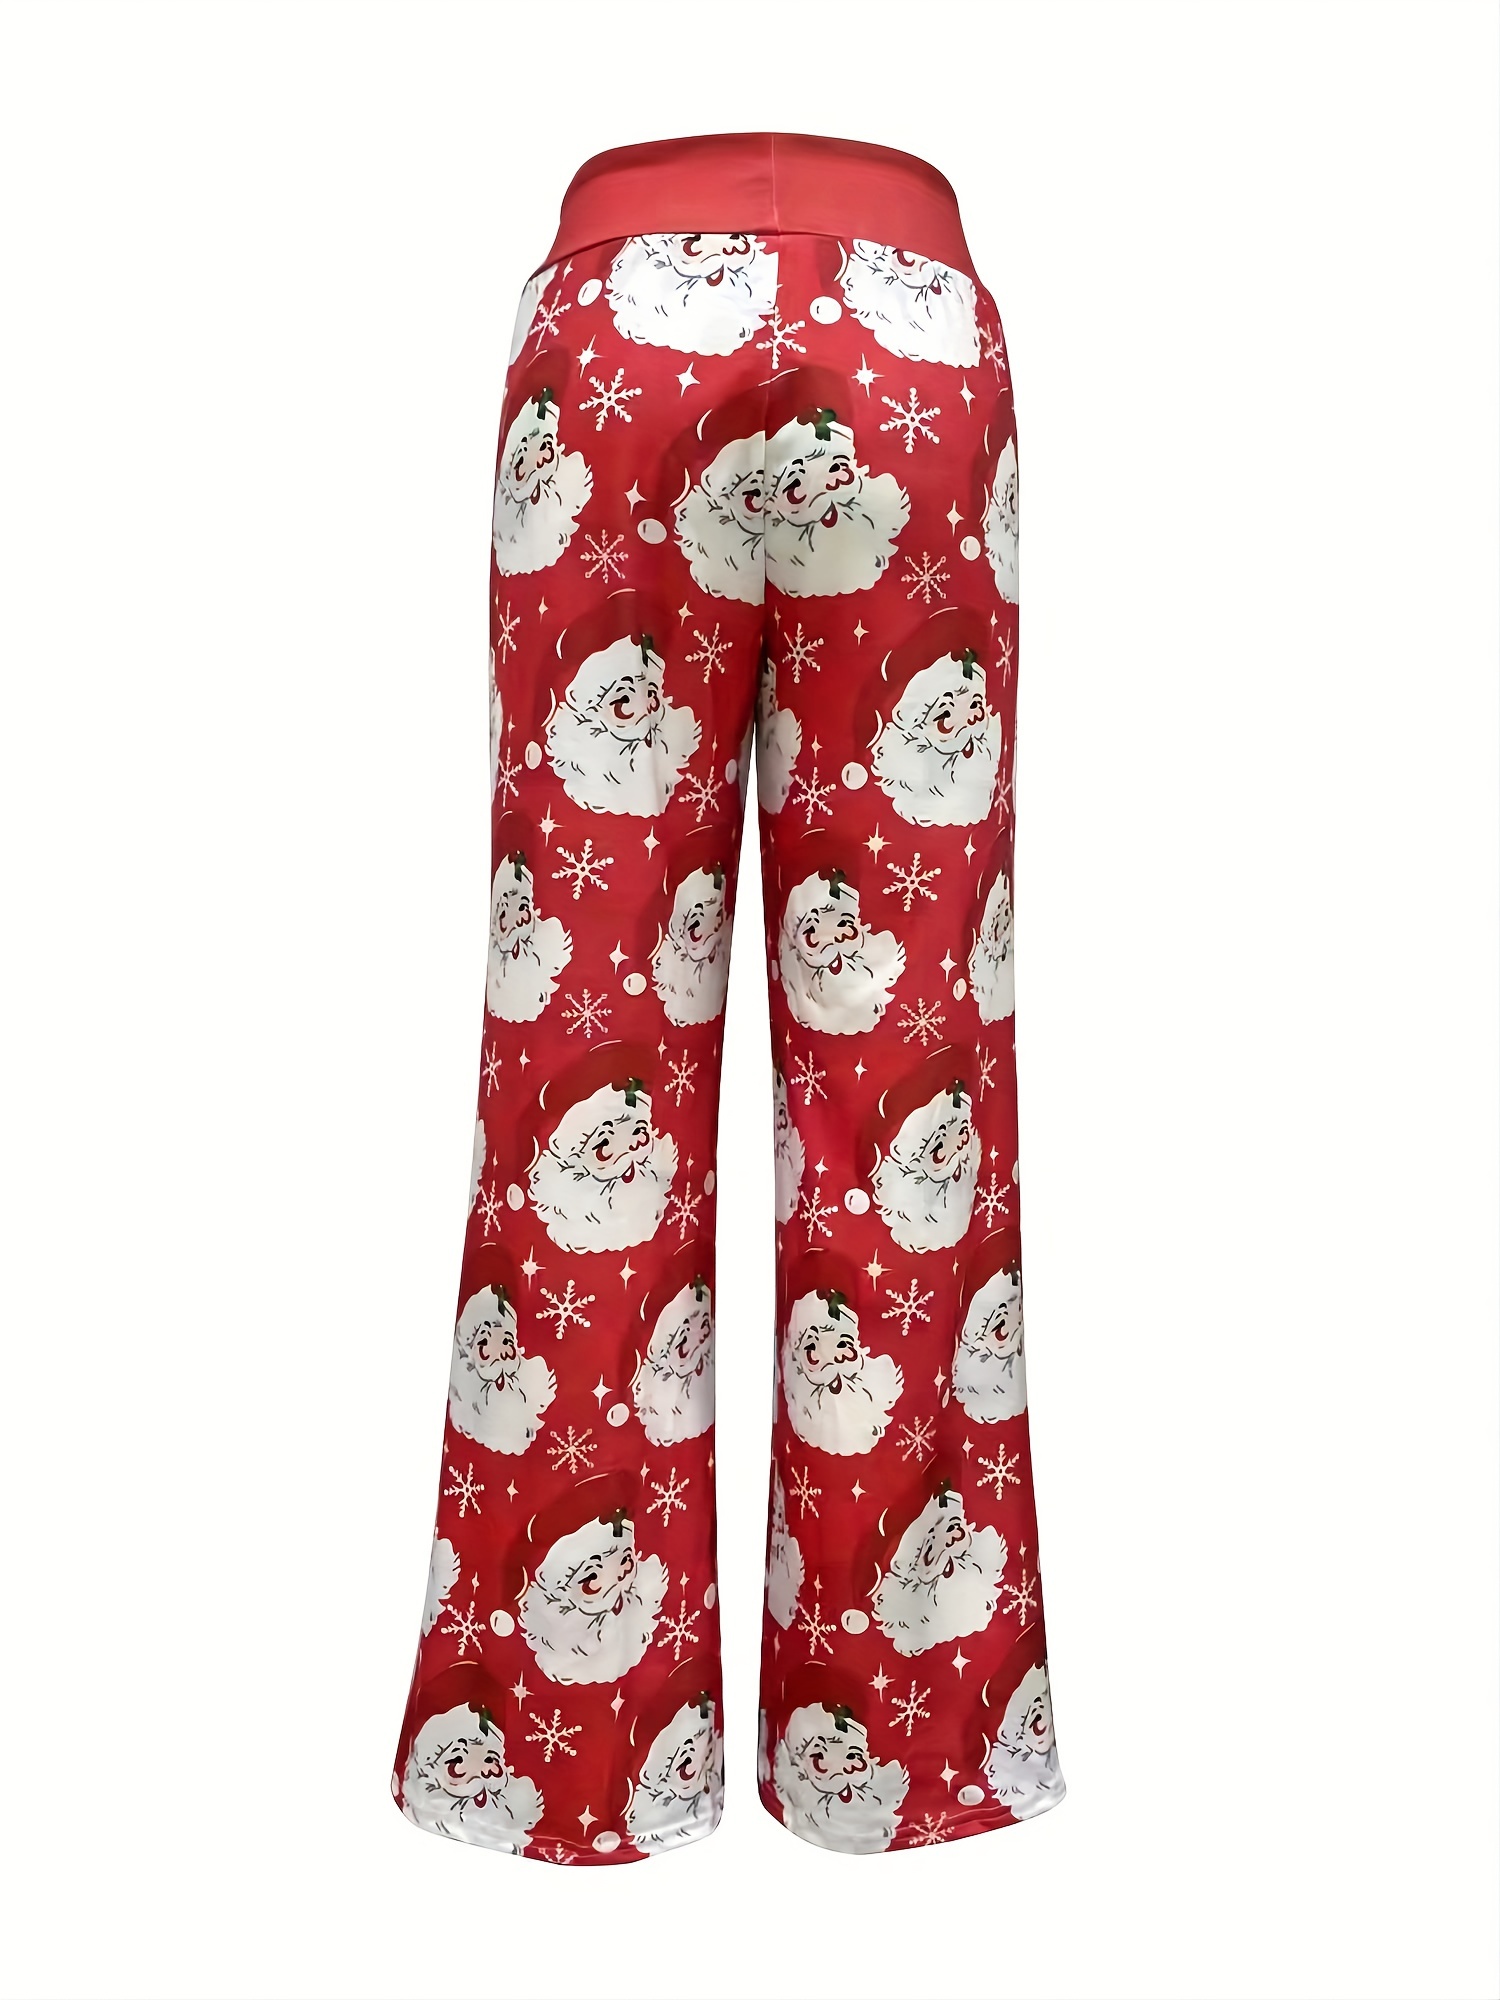 Oarencol Christmas Women's Pajama Pants Santa Claus Red Gift Ho